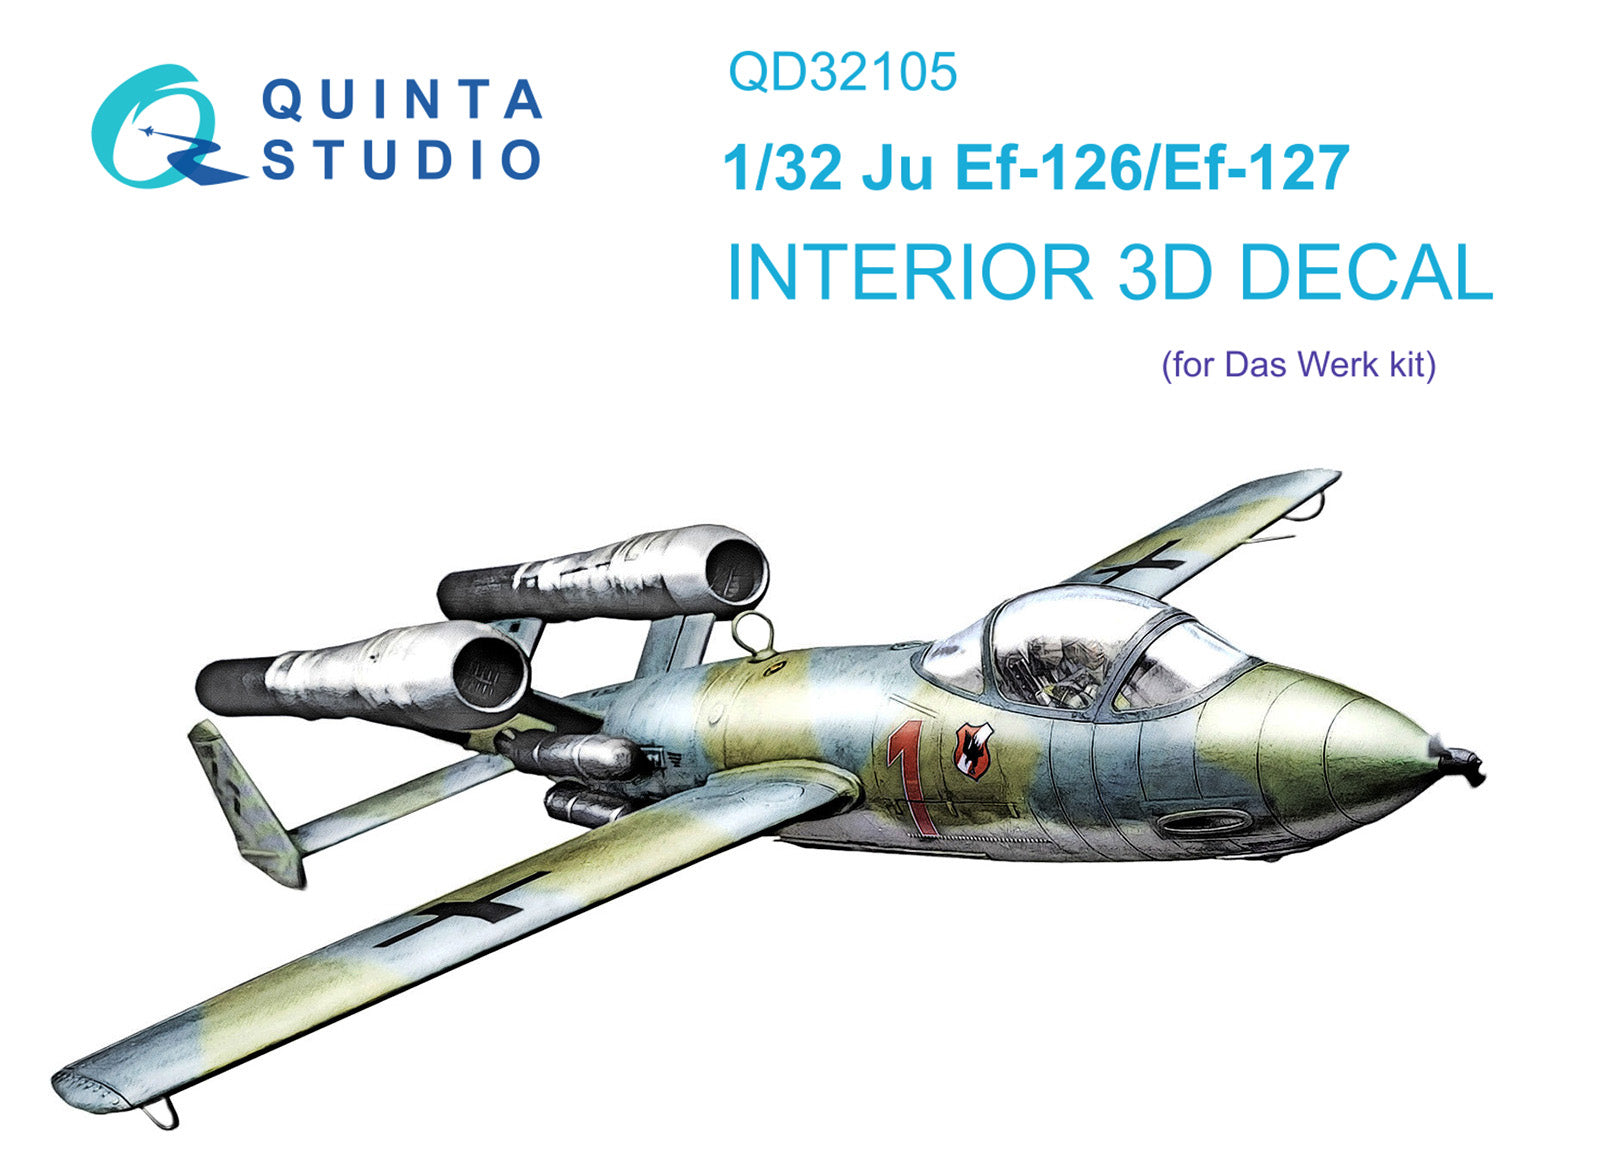 Quinta Studio - 1/32 Ju EF 126/EF 127 QD32105 for Das Werk kit